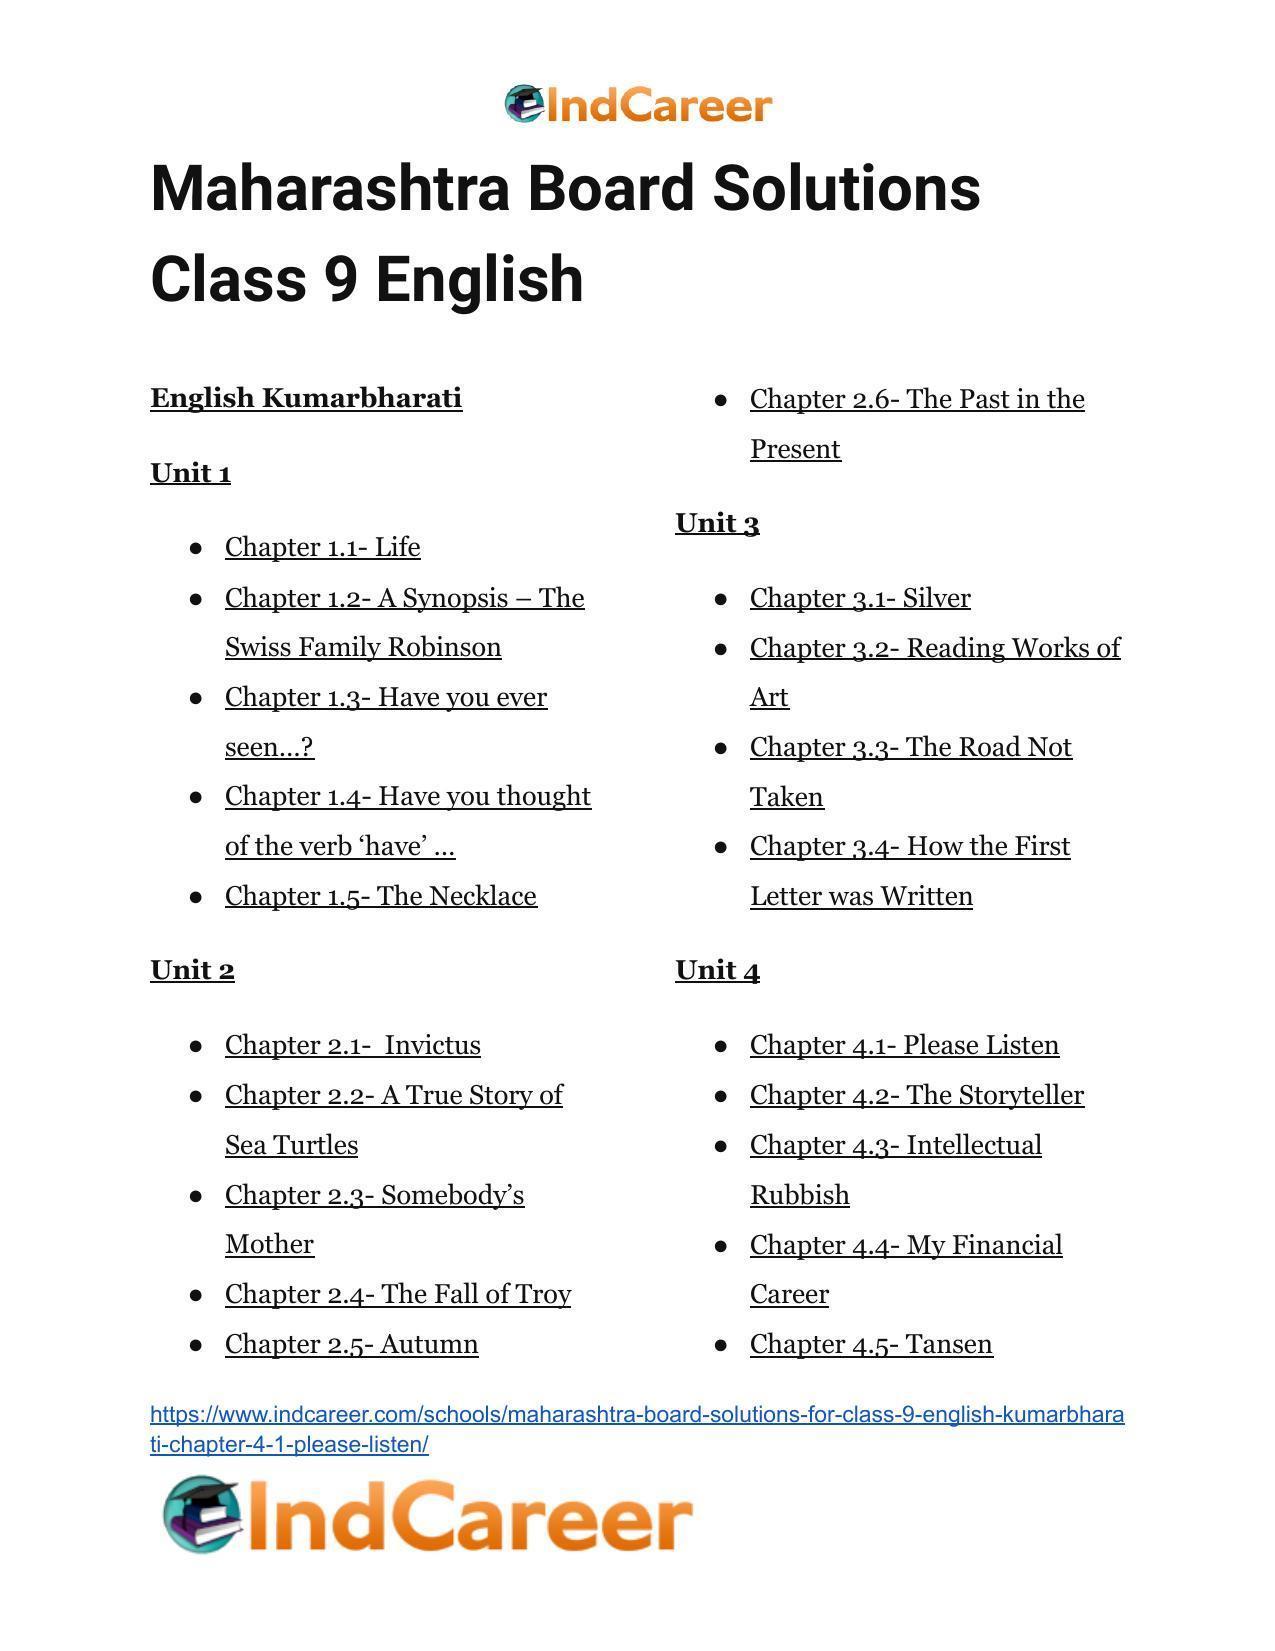 Maharashtra Board Solutions for Class 9- English Kumarbharati: Chapter 4.1- Please Listen - Page 18